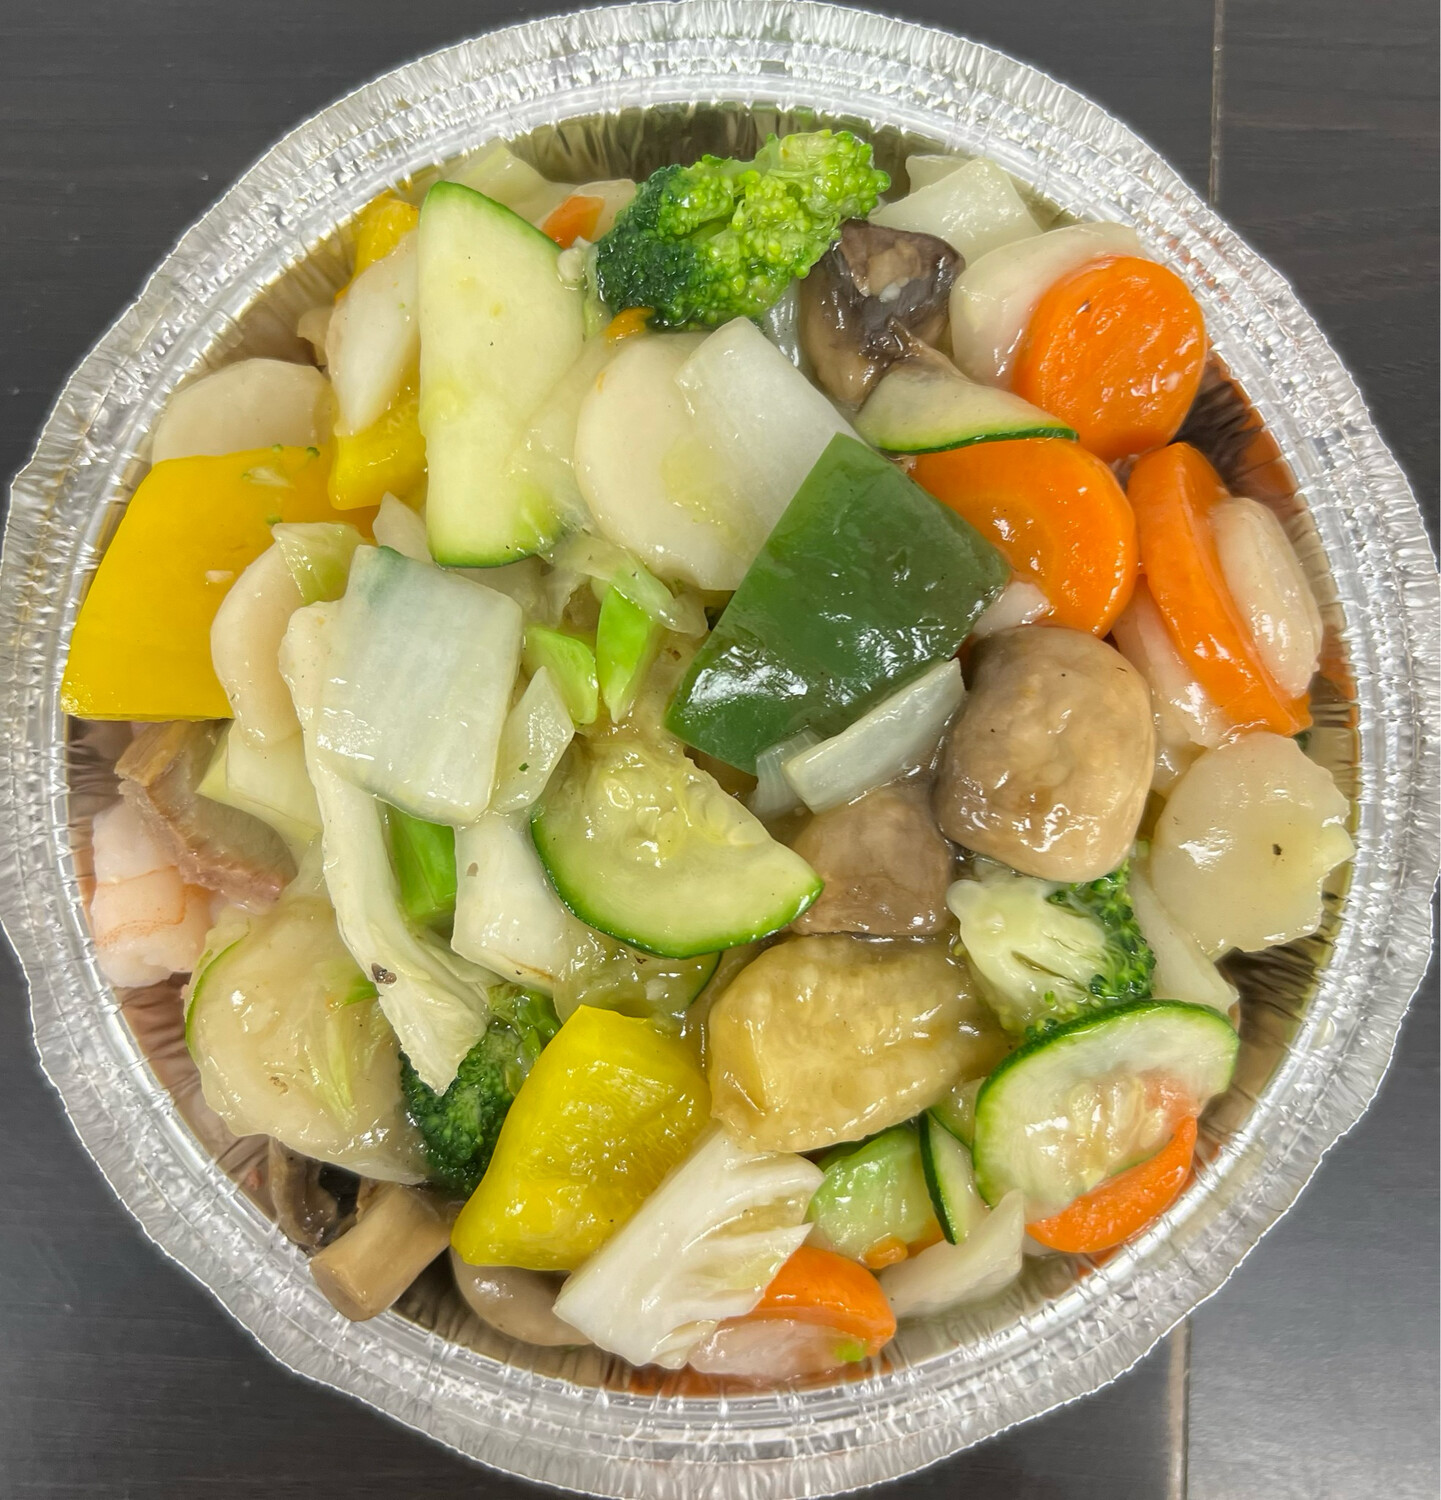 FRUITS DE MER
Moo Goo Har Pan
Légumes chinois avec
crevettes frites